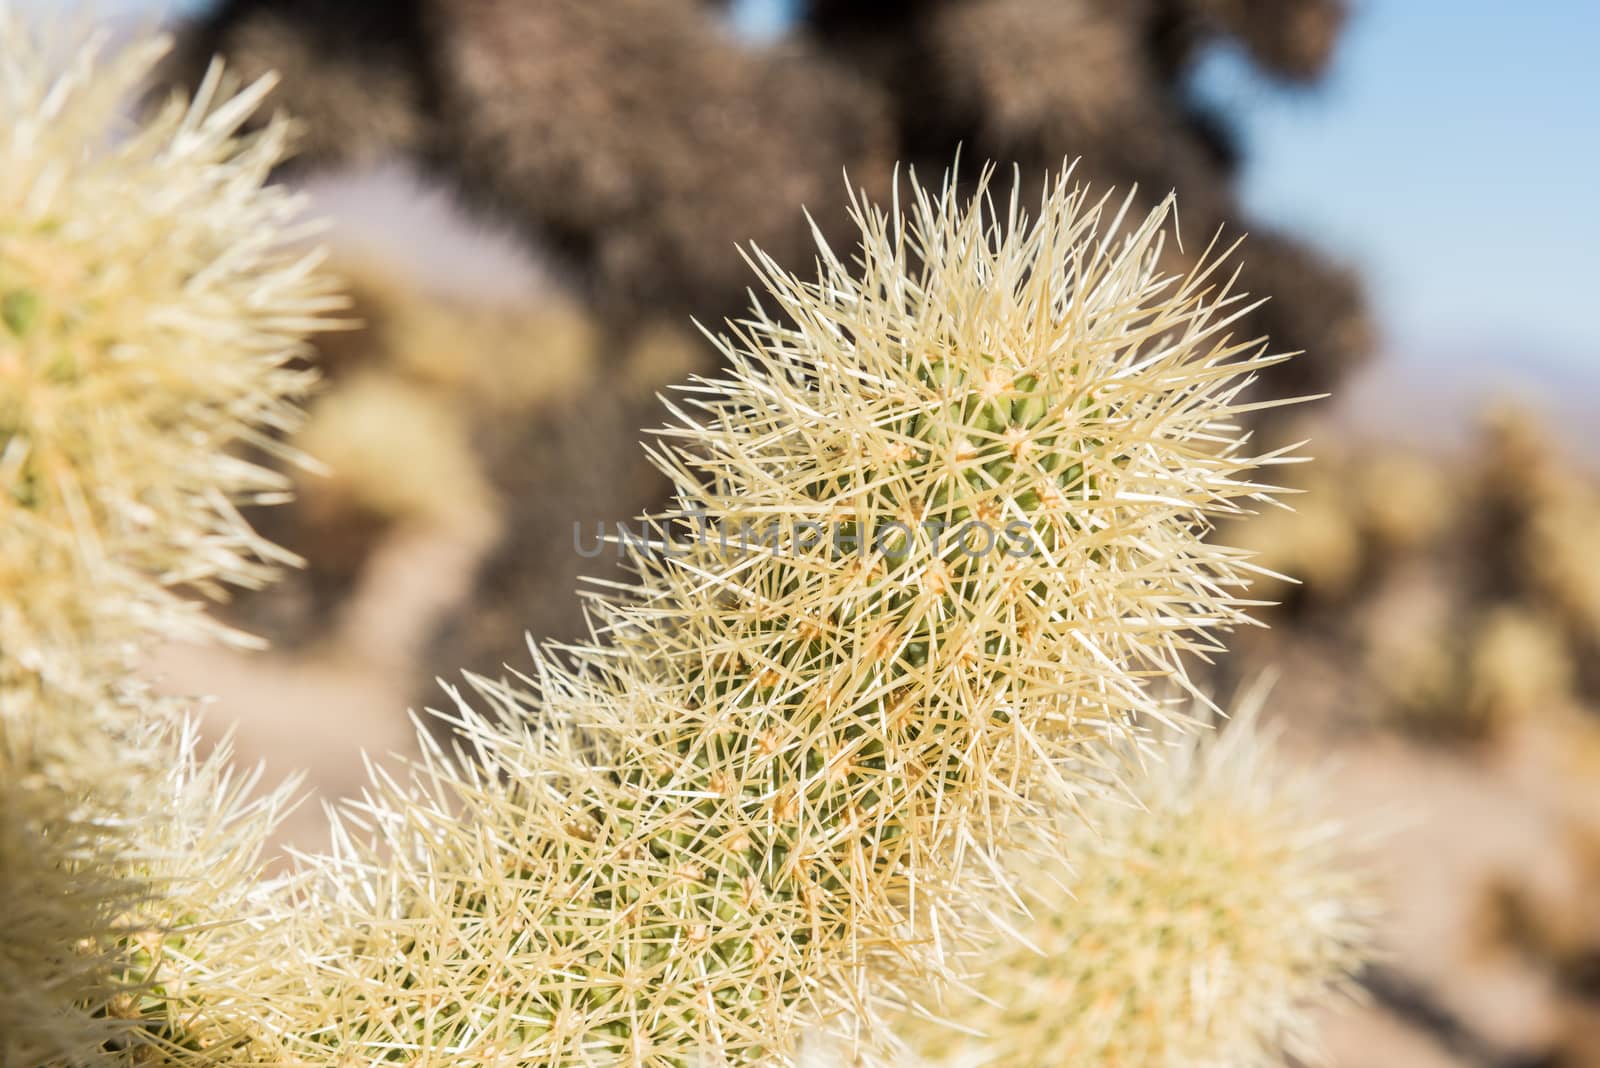 Cholla cactus (Cylindropuntia bigelovii) known as Teddy-bear cholla in the Cholla Cactus Garden in Joshua Tree National Park, California